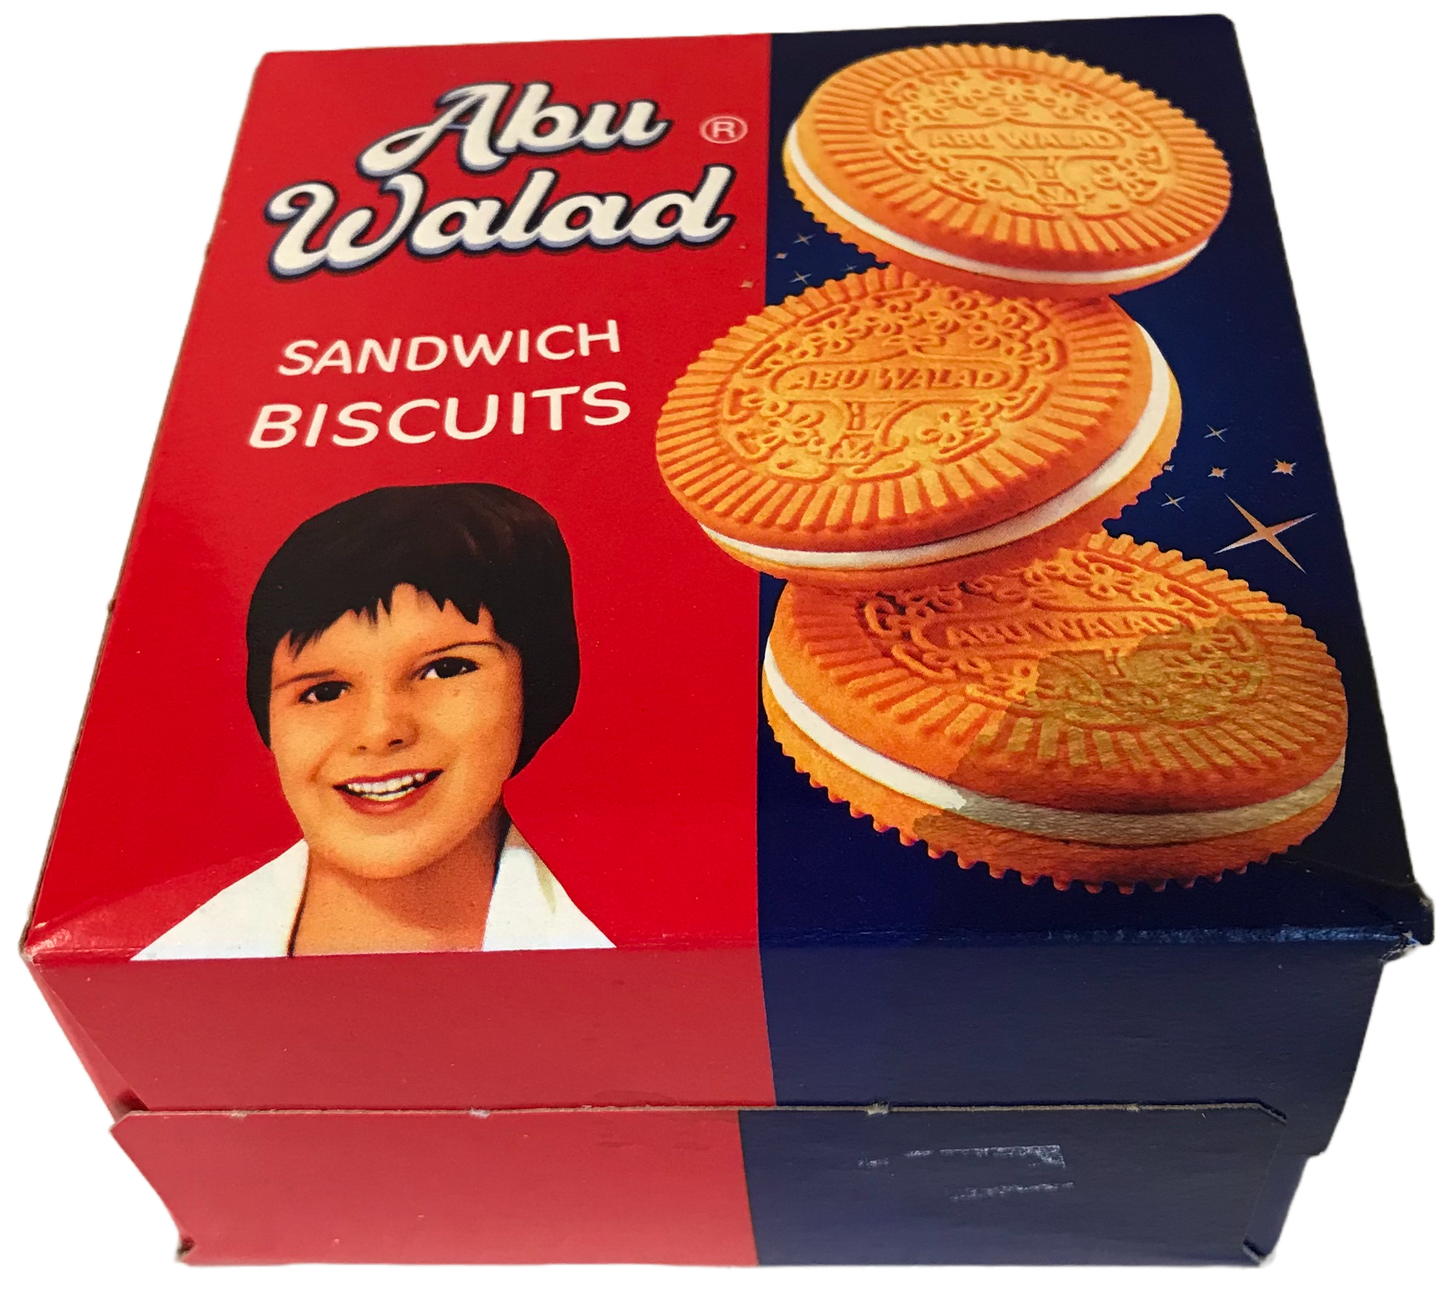 Abu Walad Sandwich Biscuits